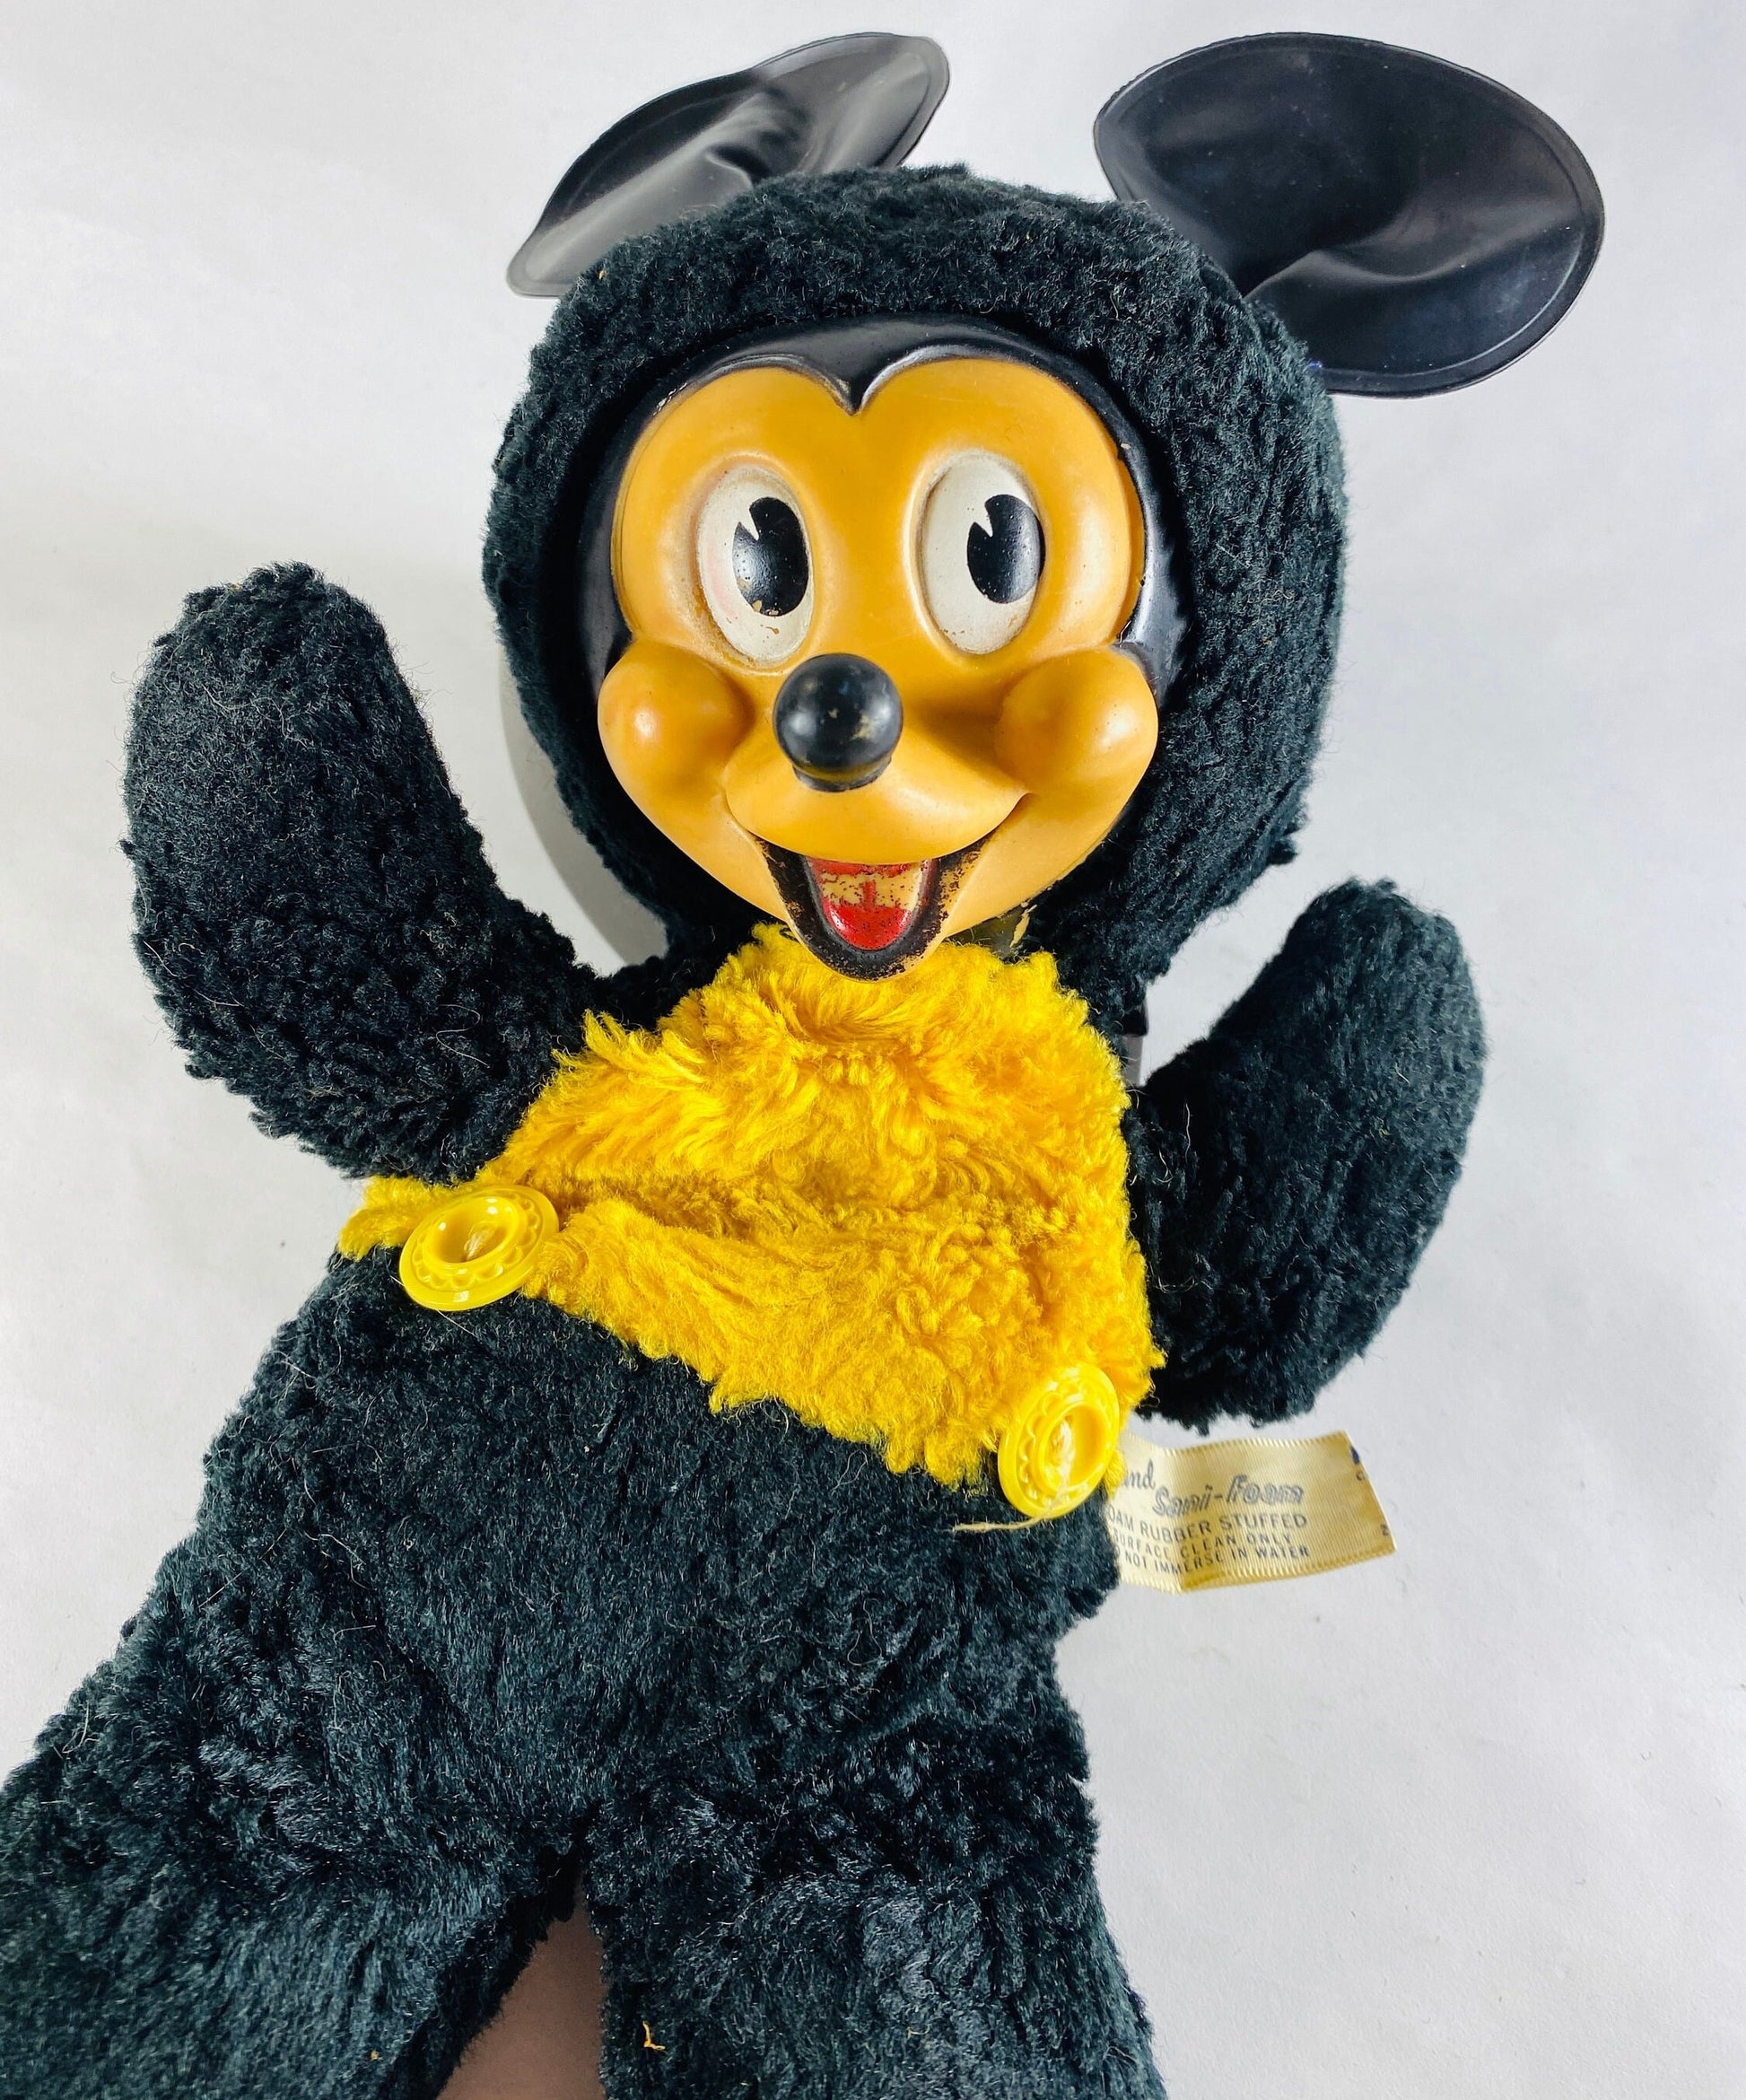 Original Mickey Mouse vintage Disney collectible circa 1950 Gund Sani-Foam Rubber Face plush doll J Swedlin New York